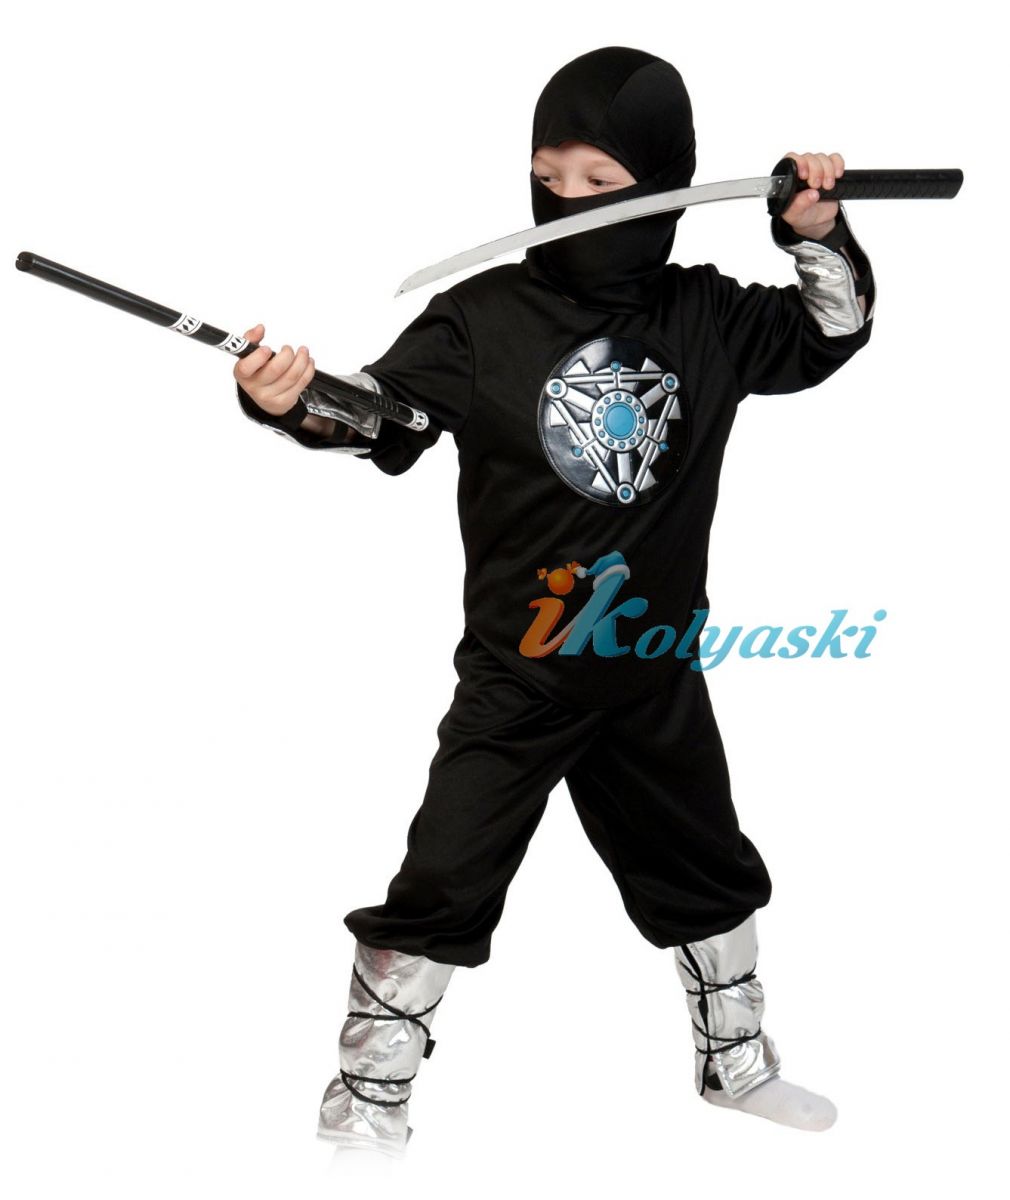 Новогодний костюм самурая для мальчика своими руками